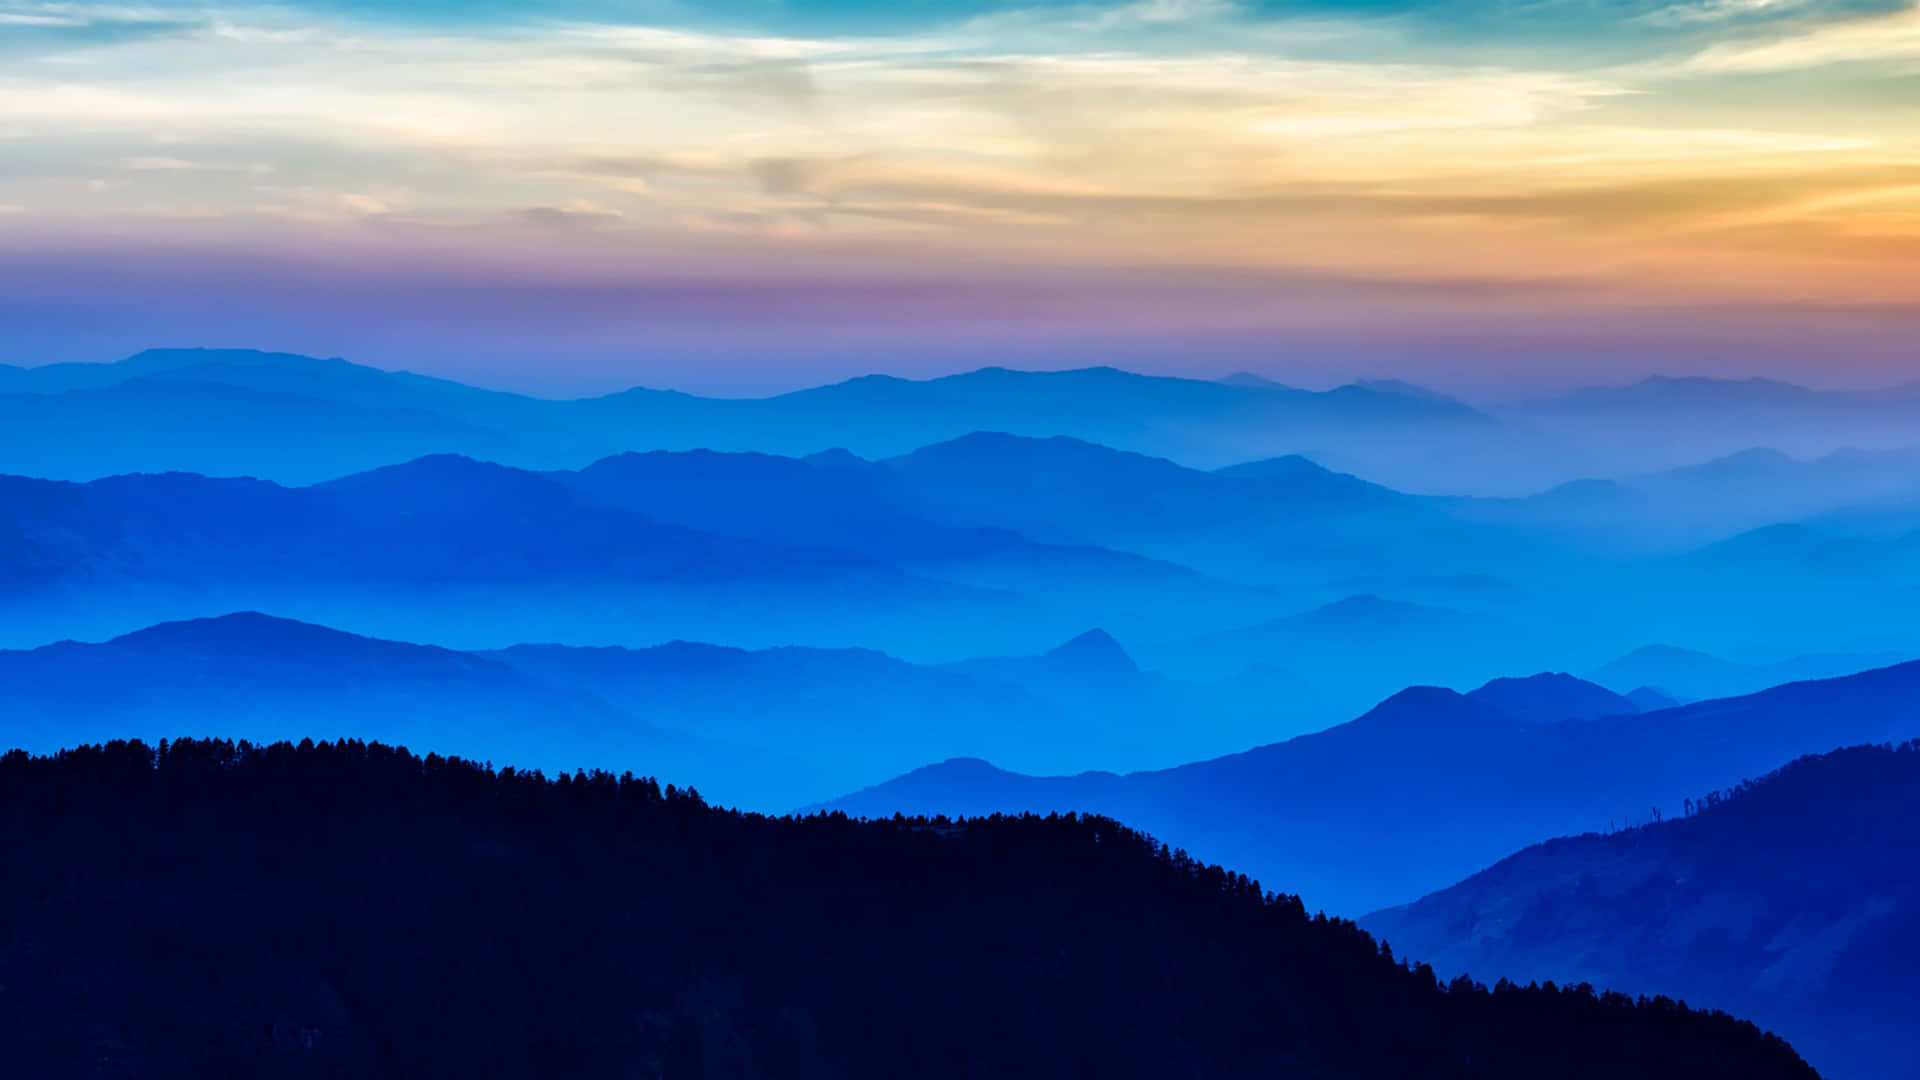 Blue Mountain Silhouettesat Sunset Wallpaper